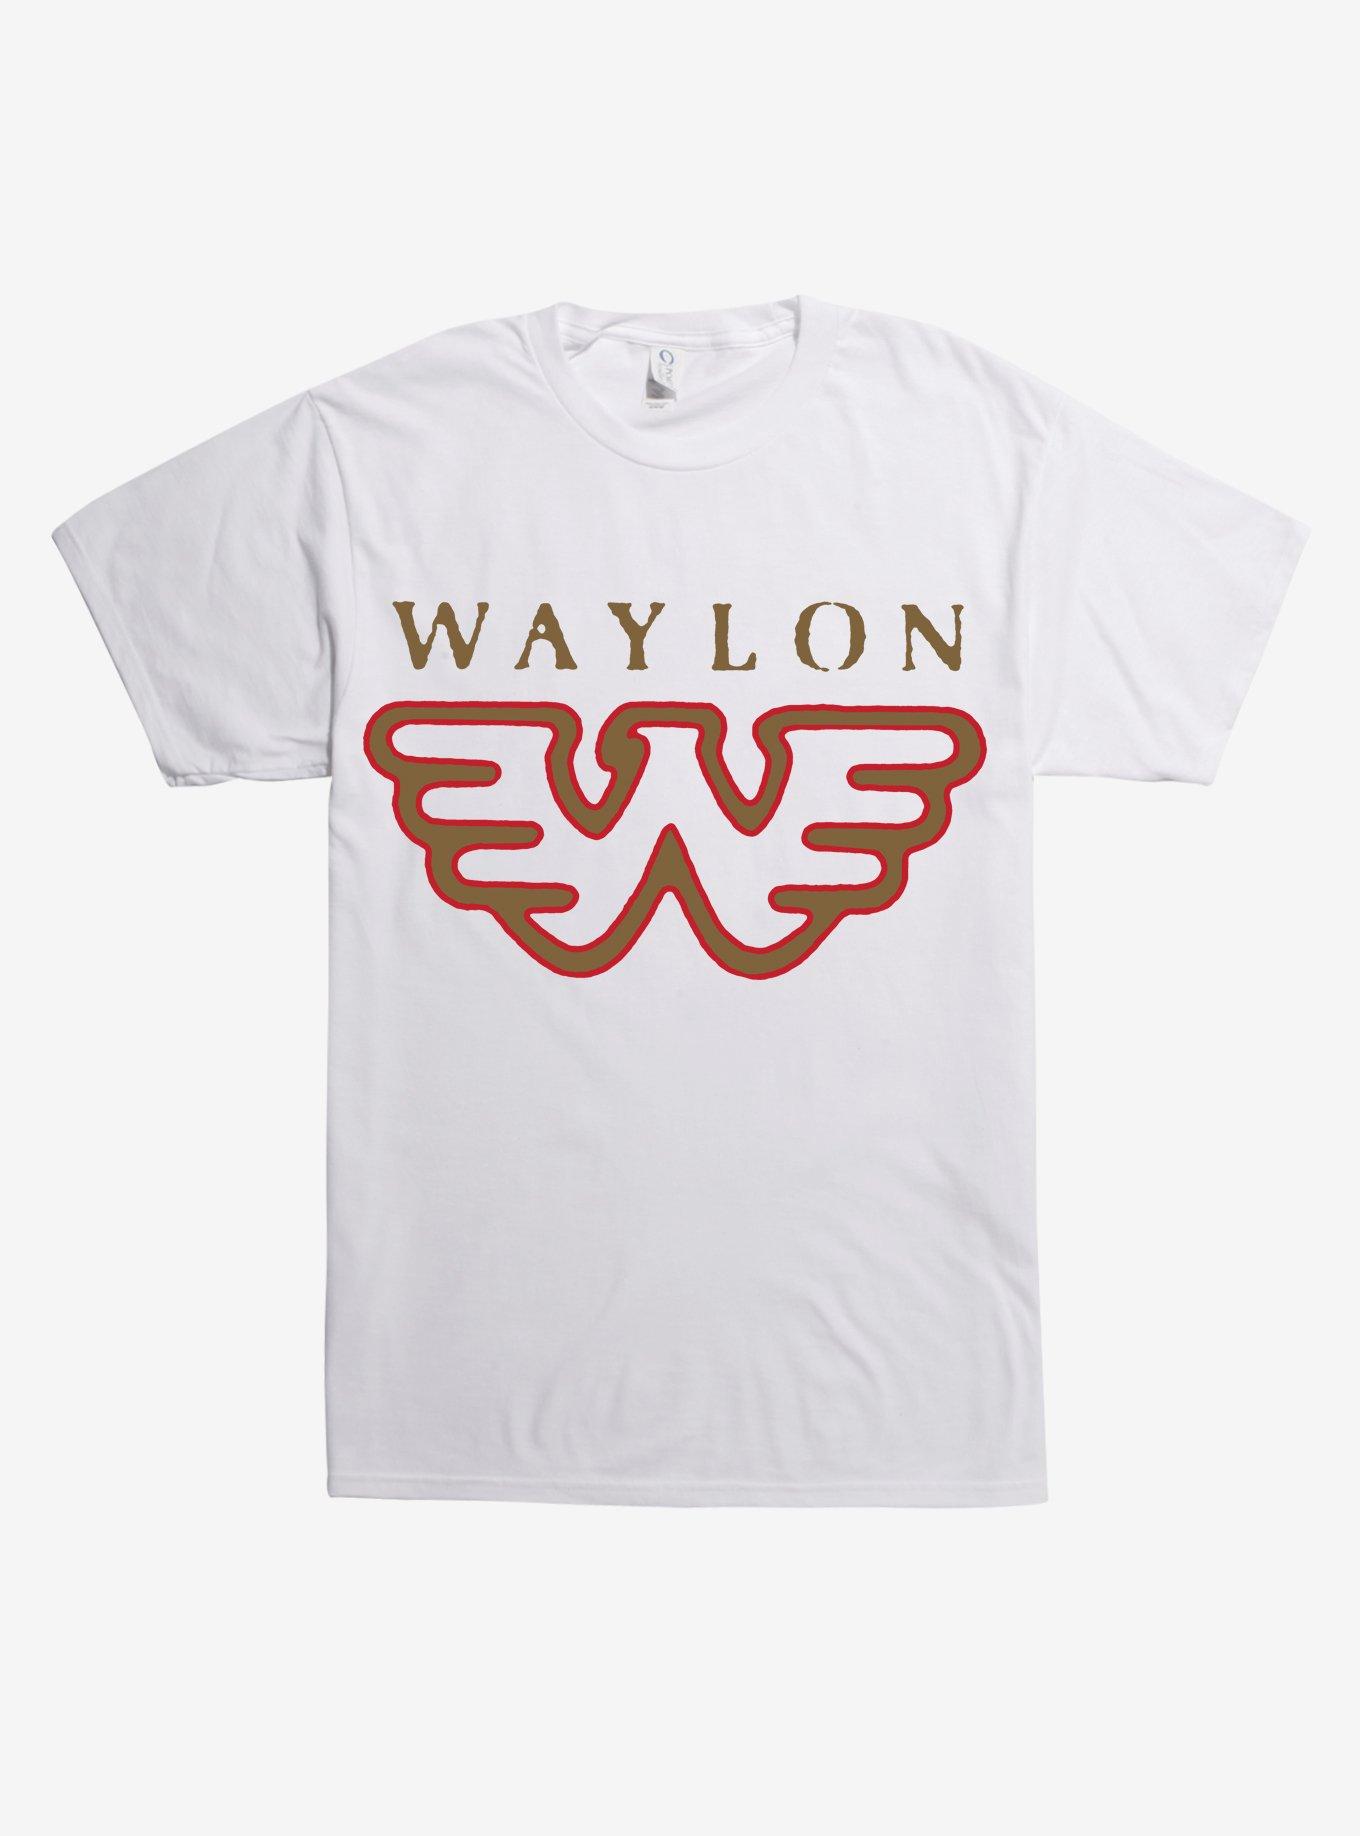 Waylon Jennings Flying T-Shirt, WHITE, hi-res